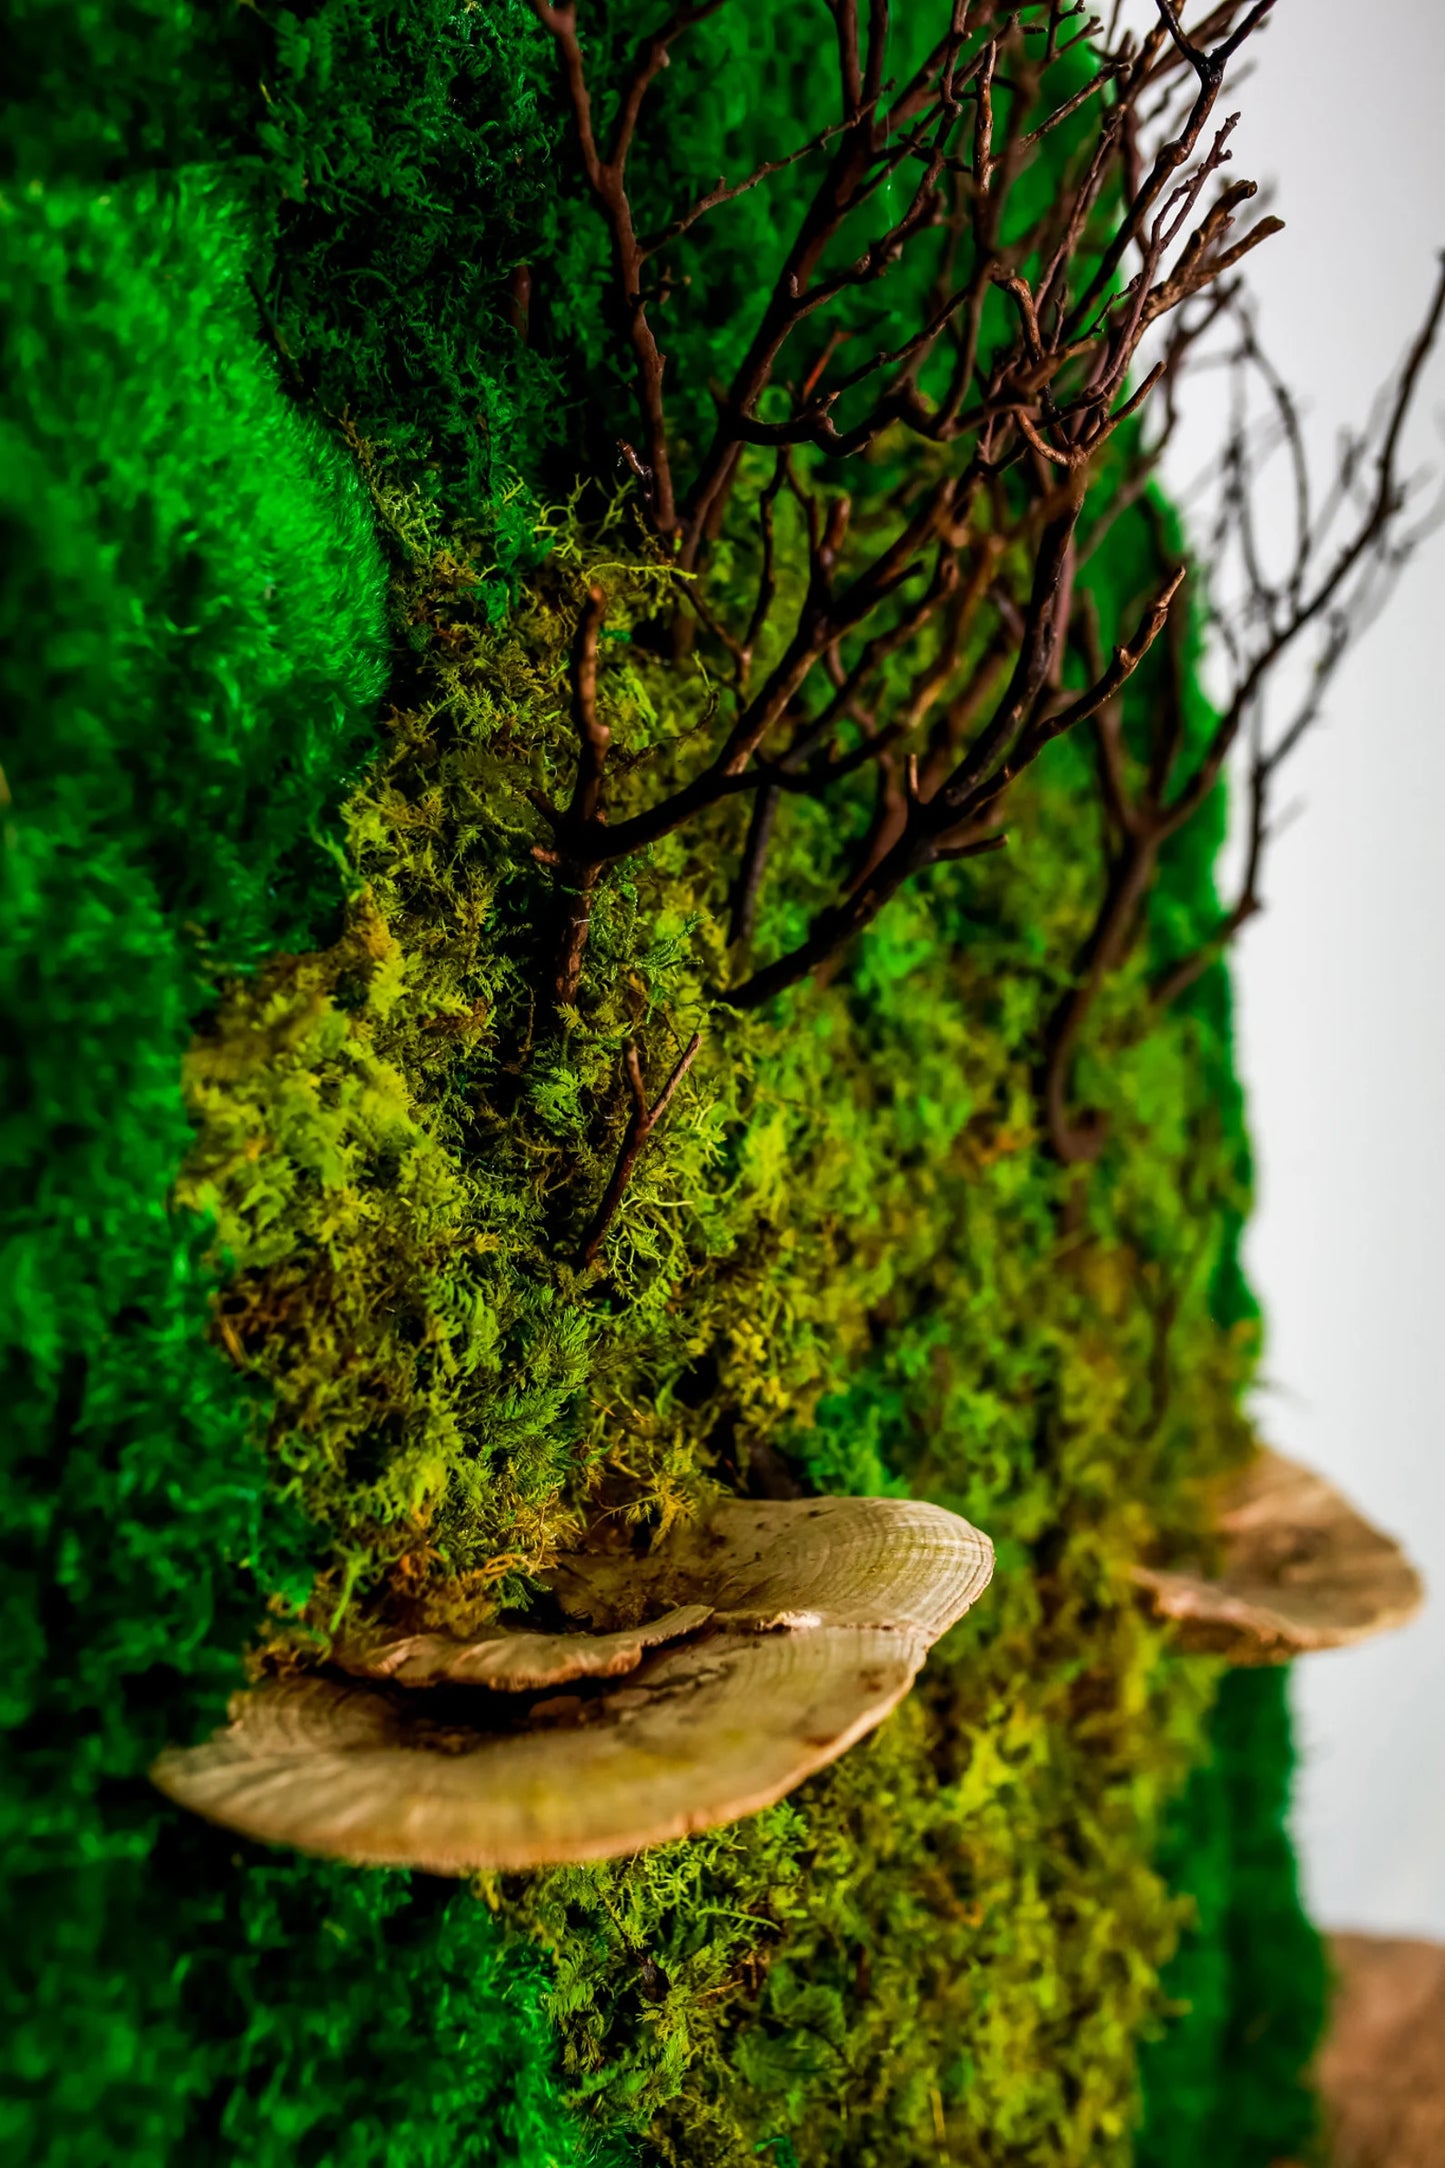 Preserved Moss Wall with Manzanita Branches and Mushrooms